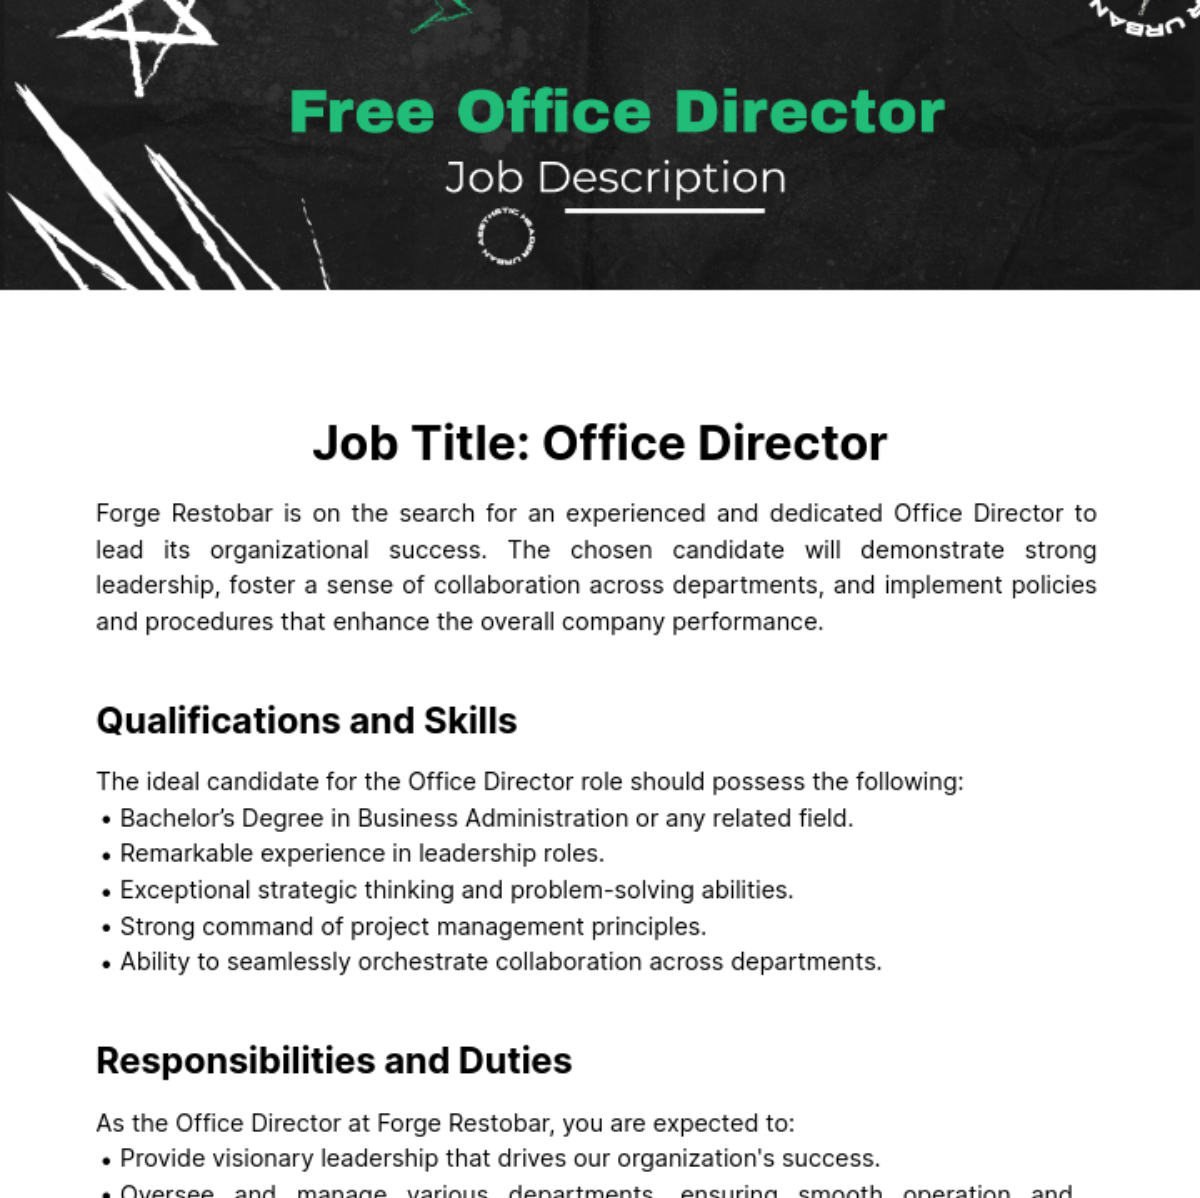 Free Office Director Job Description Template